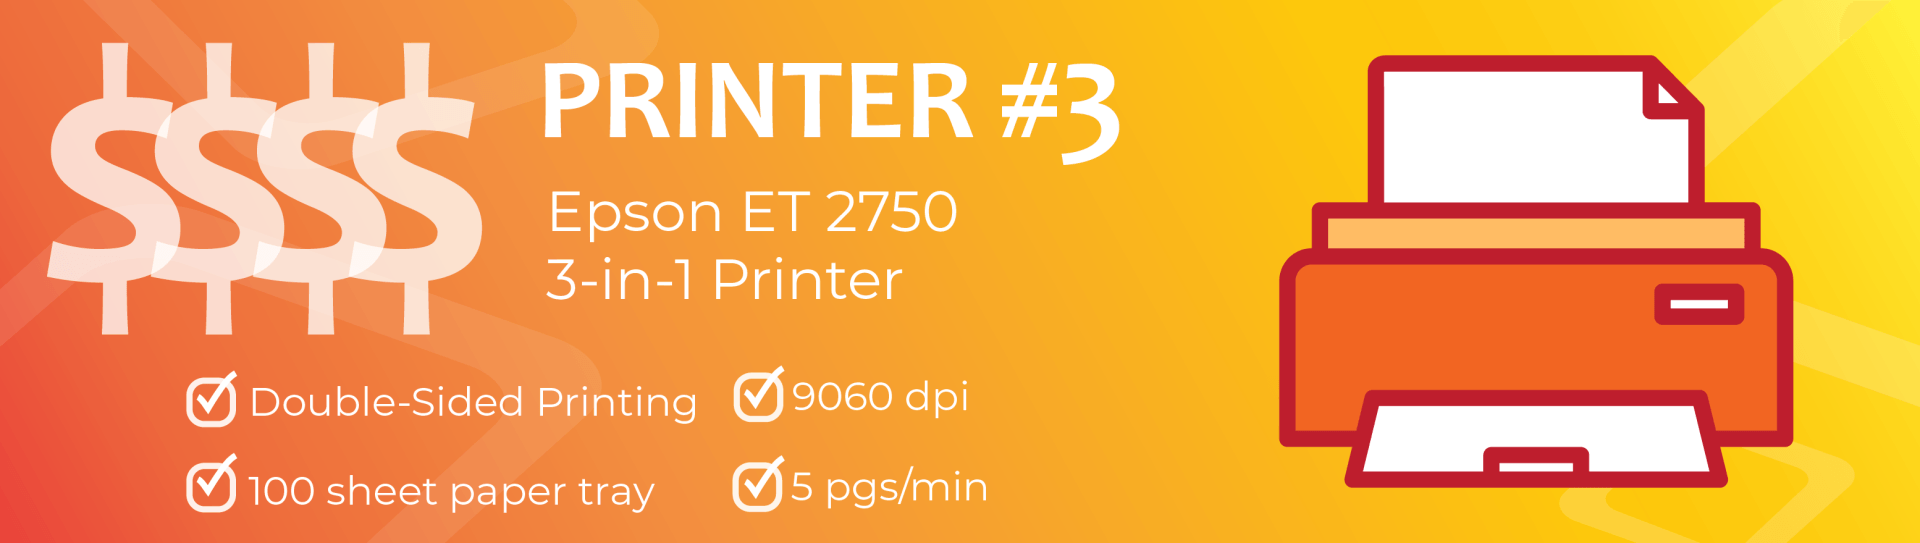 Printer graphic of 3-in-1 Epson et 2750